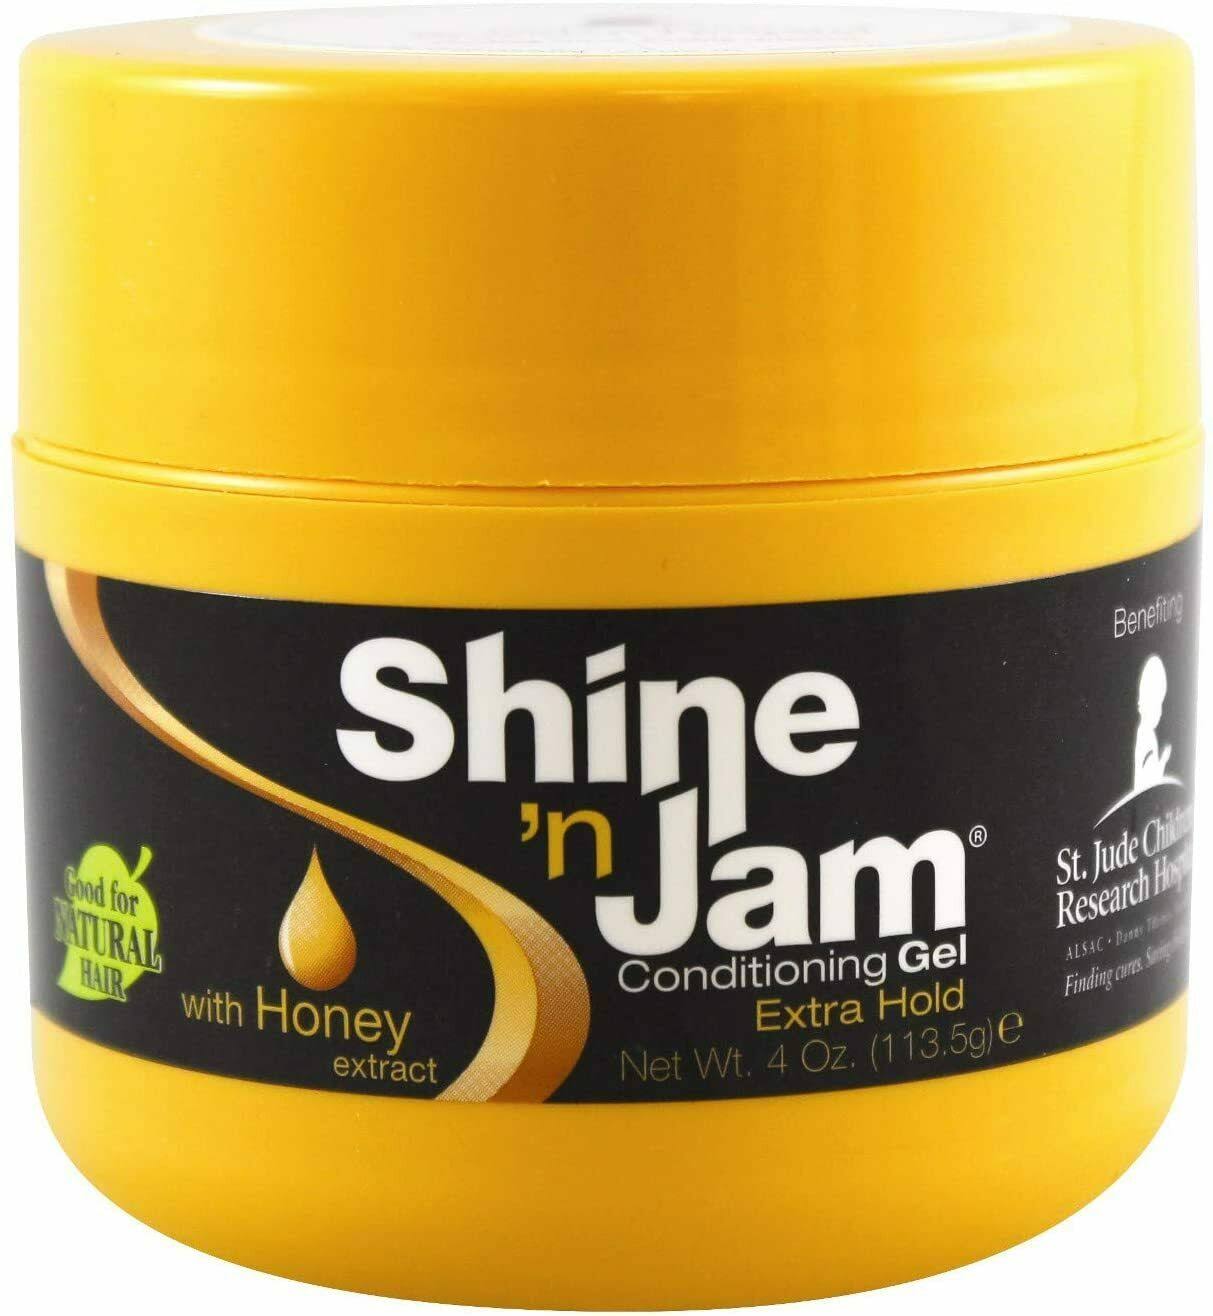 Ampro Shine 'n Jam Conditioning Gel - Extra Hold, 4oz